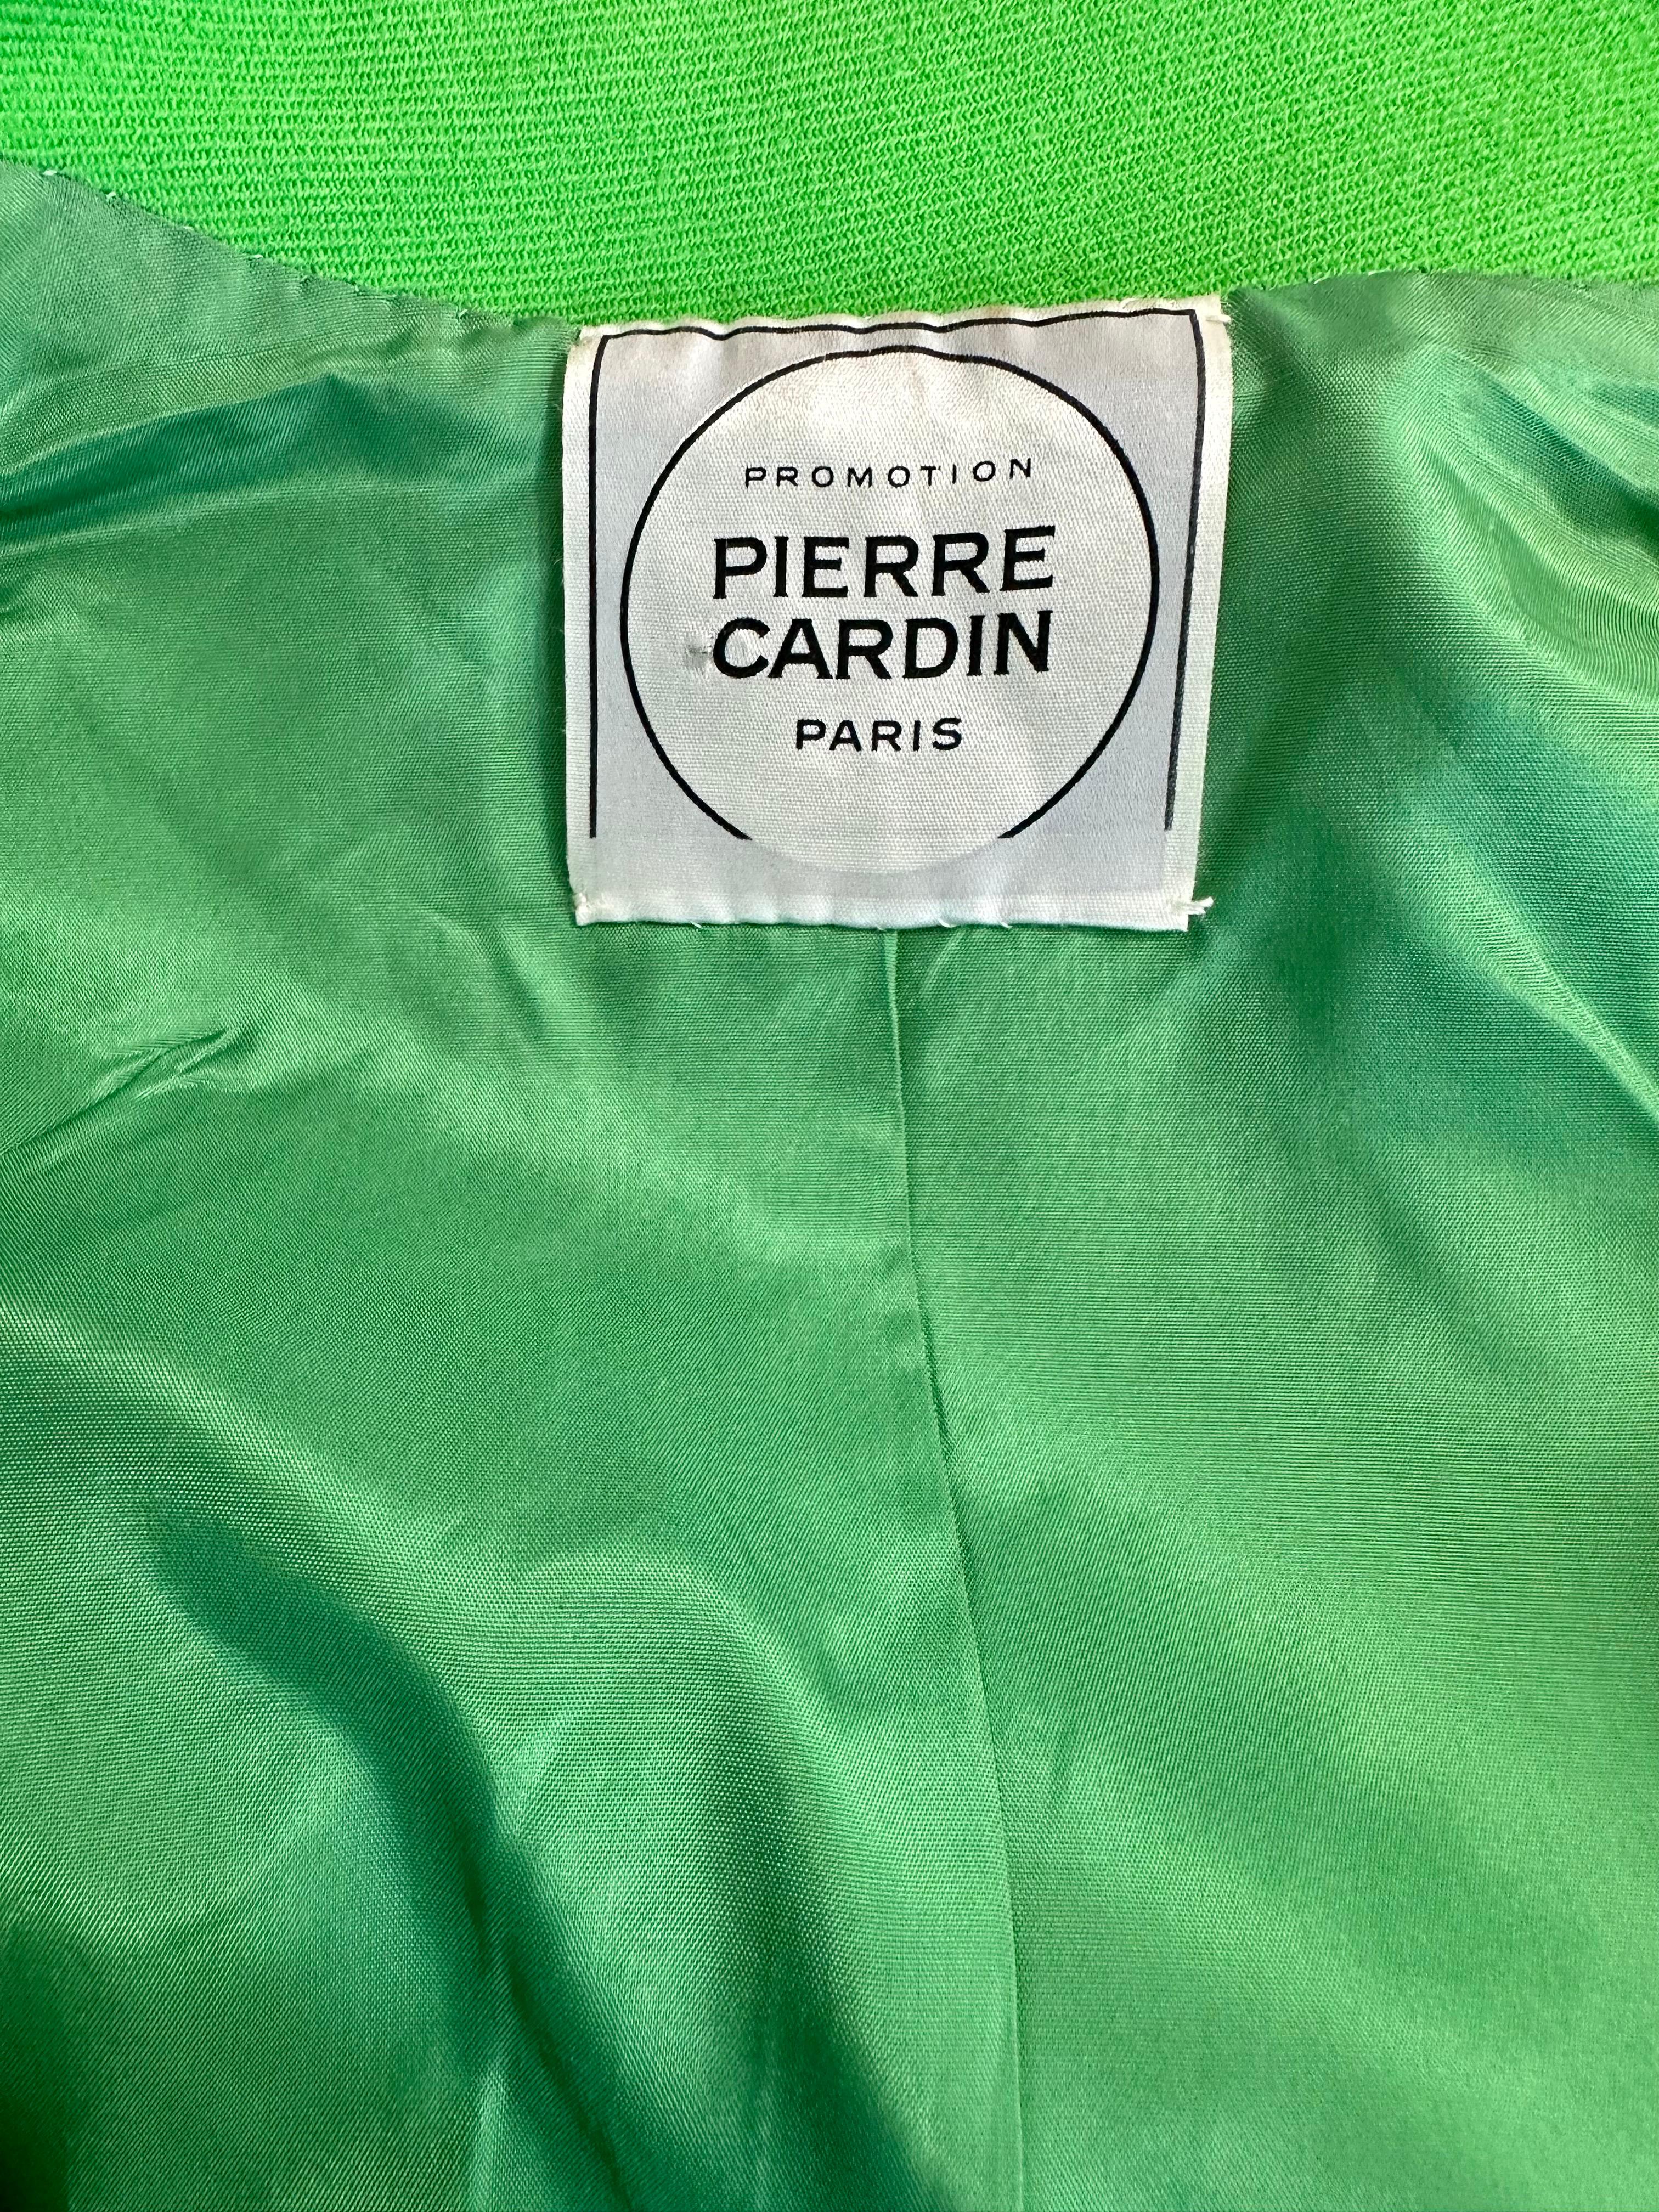 Pierre Cardin Promotion 1970 veste en laine verte en vente 7